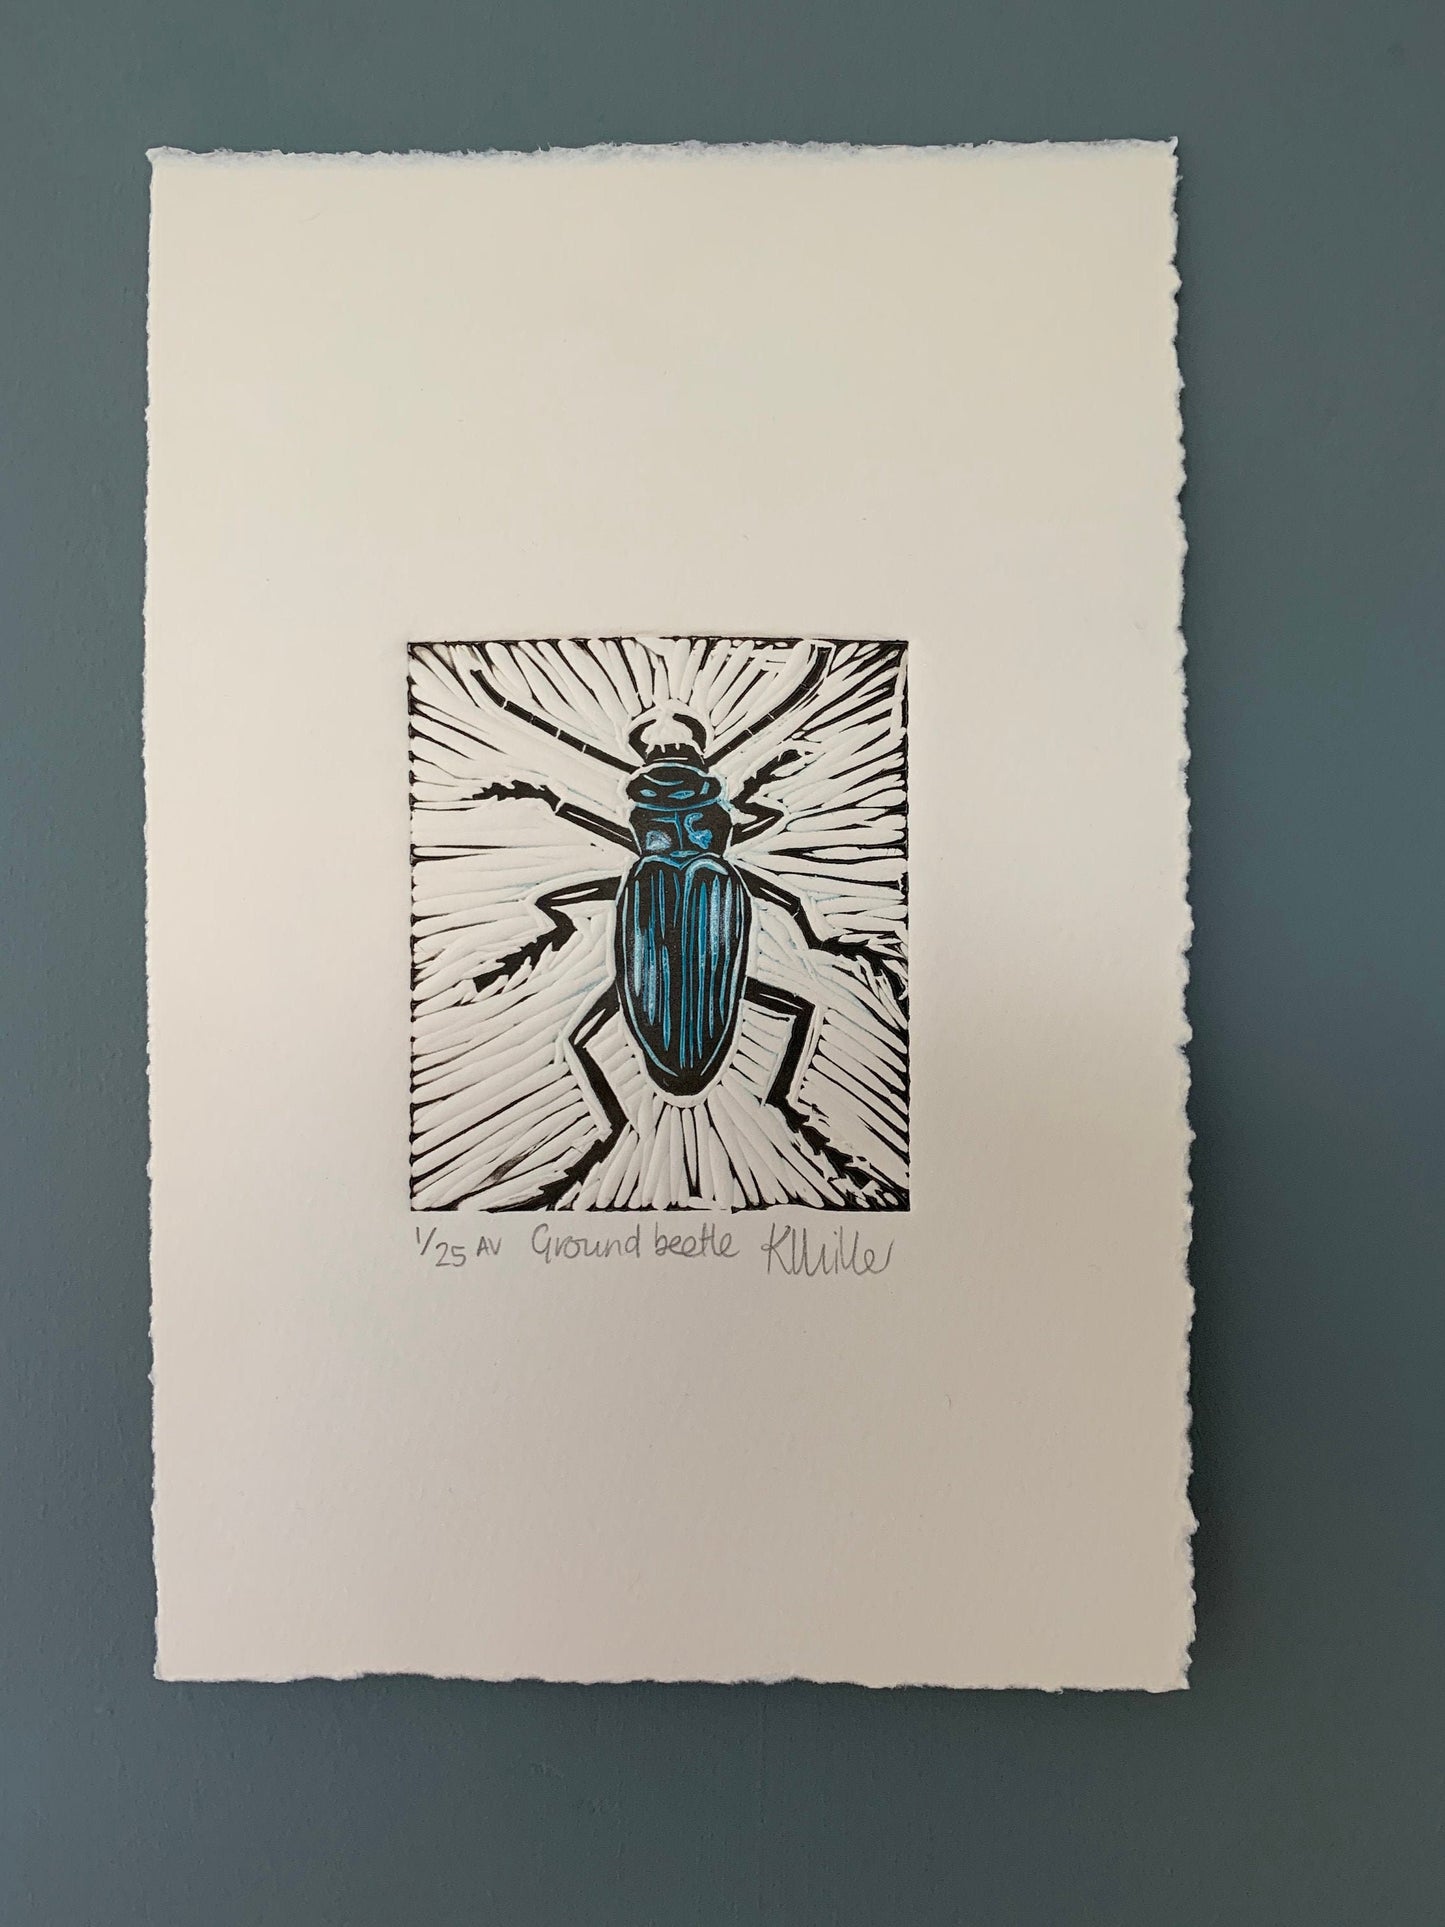 1018 Ground beetle